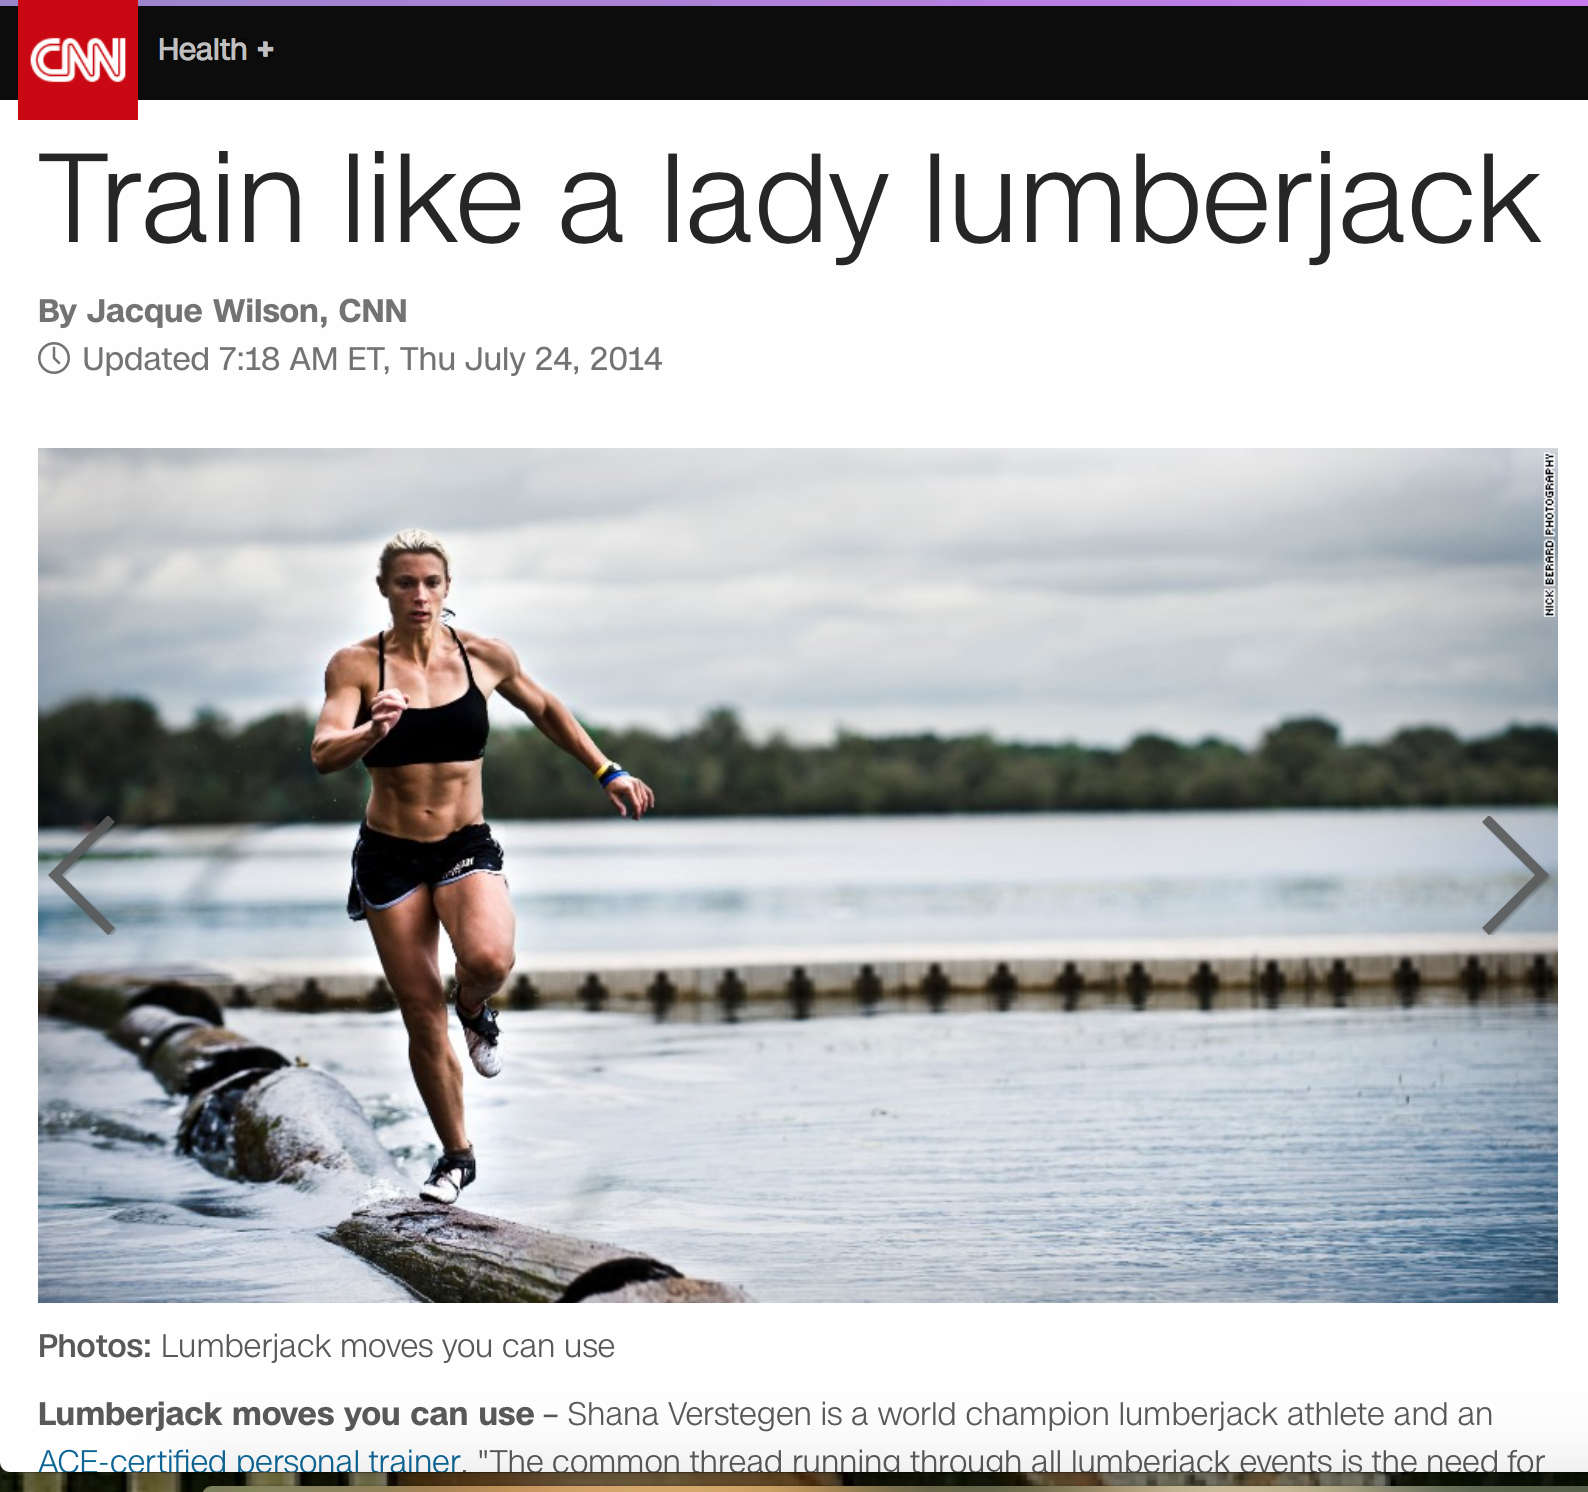 Train Like a Lady Lumberjack: CNN 2014